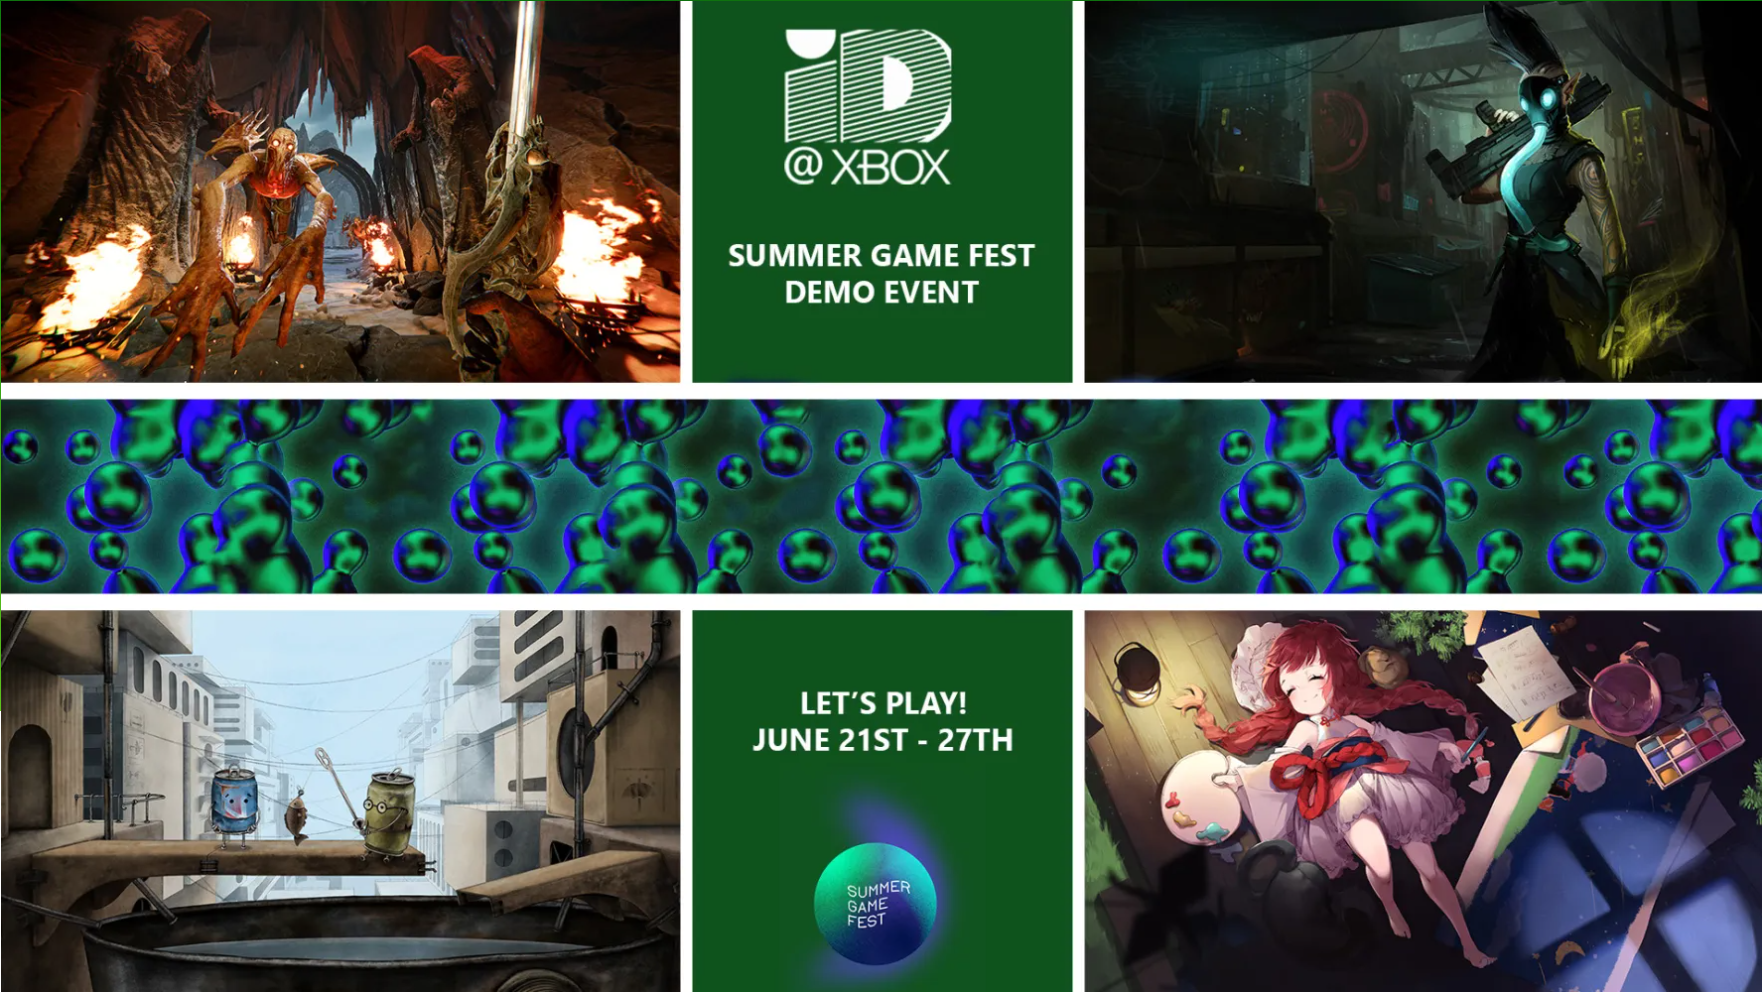 Summer Game Fest Demo Event